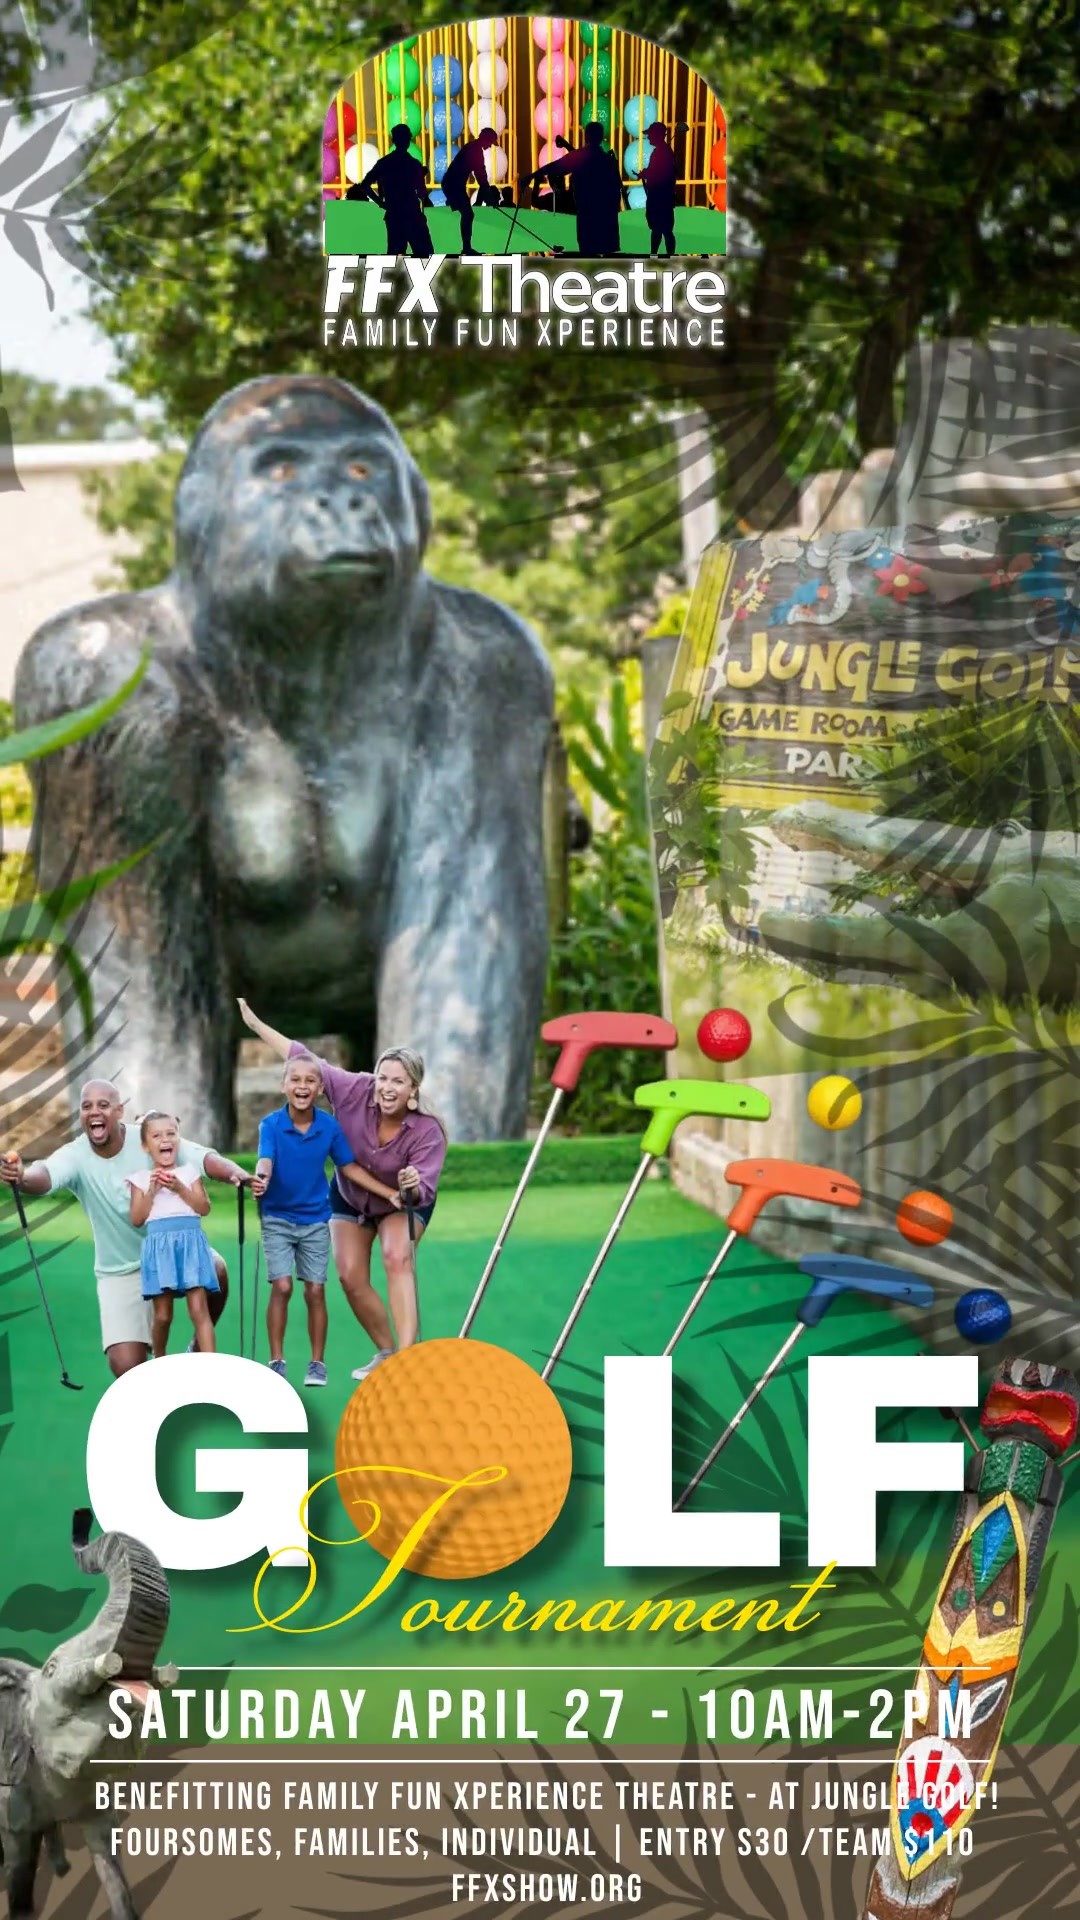 Jungle Golf Tournament! FFX Fun-raiser for all ages! on avr. 29, 00:00@Jungle Golf - Achetez des billets et obtenez des informations surFamily Fun Xperience tickets.ffxshow.org